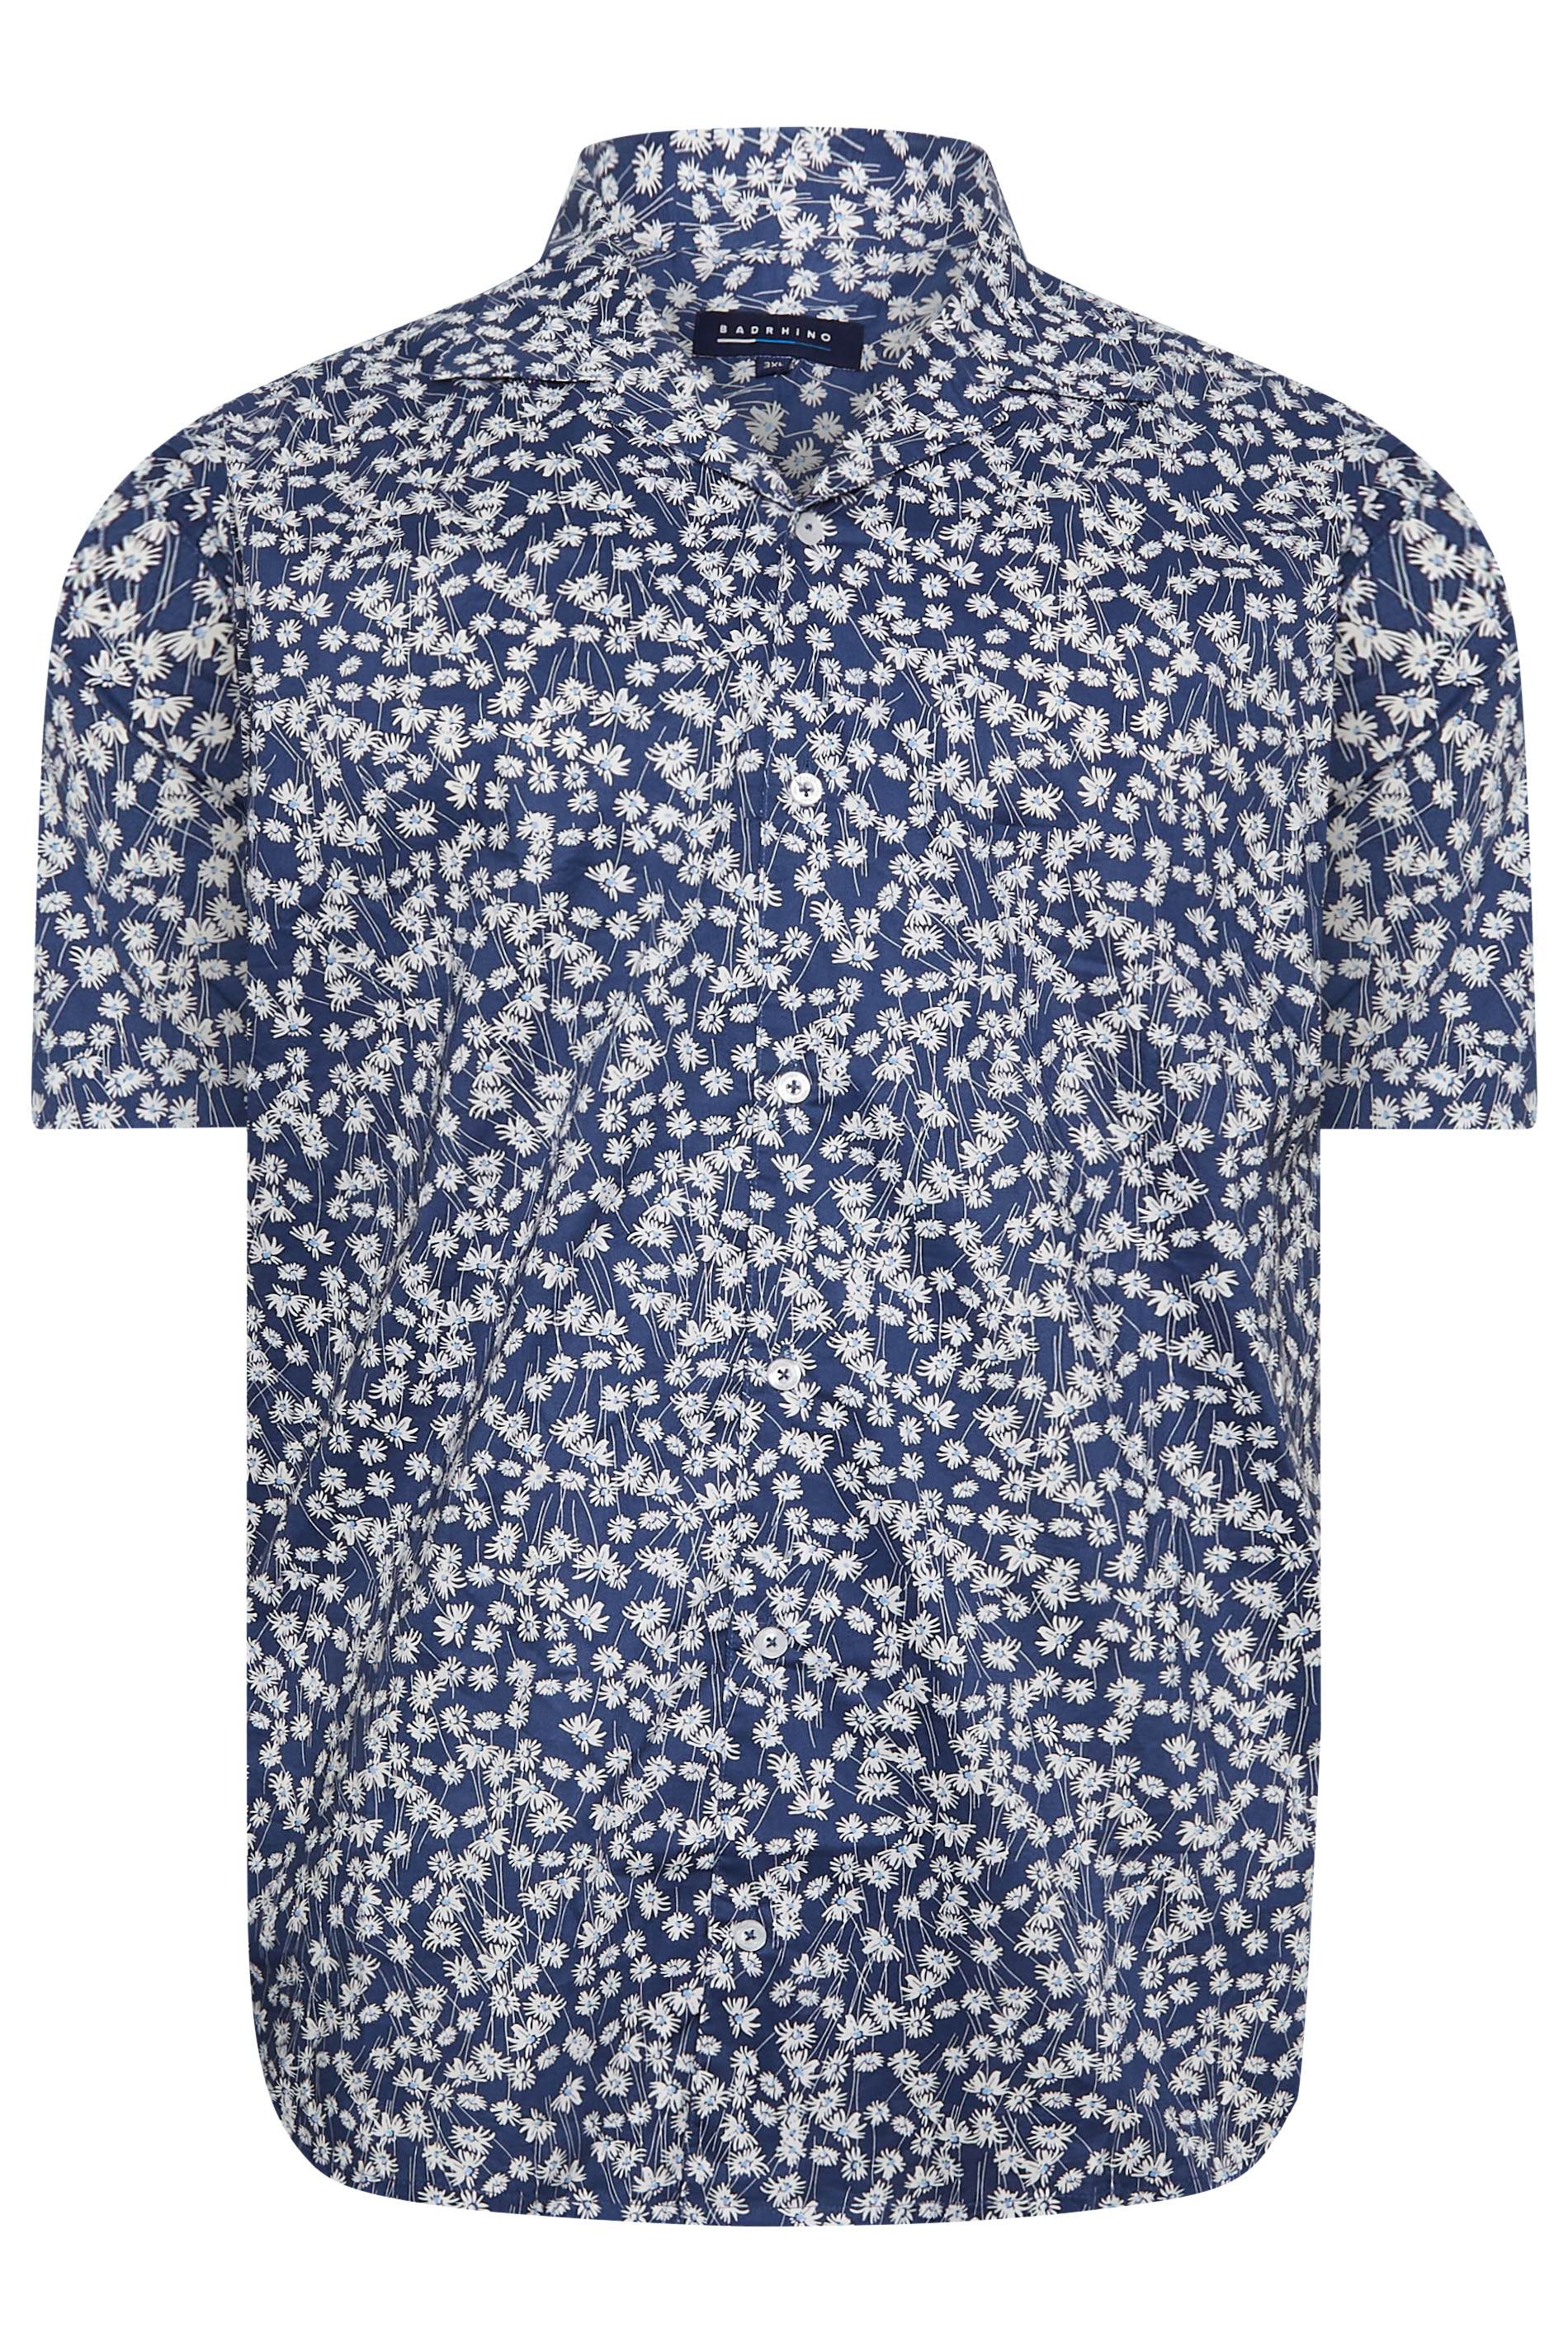 BadRhino Big & Tall Plus Size Mens Navy Blue Floral Short Sleeve Shirt | BadRhino  3